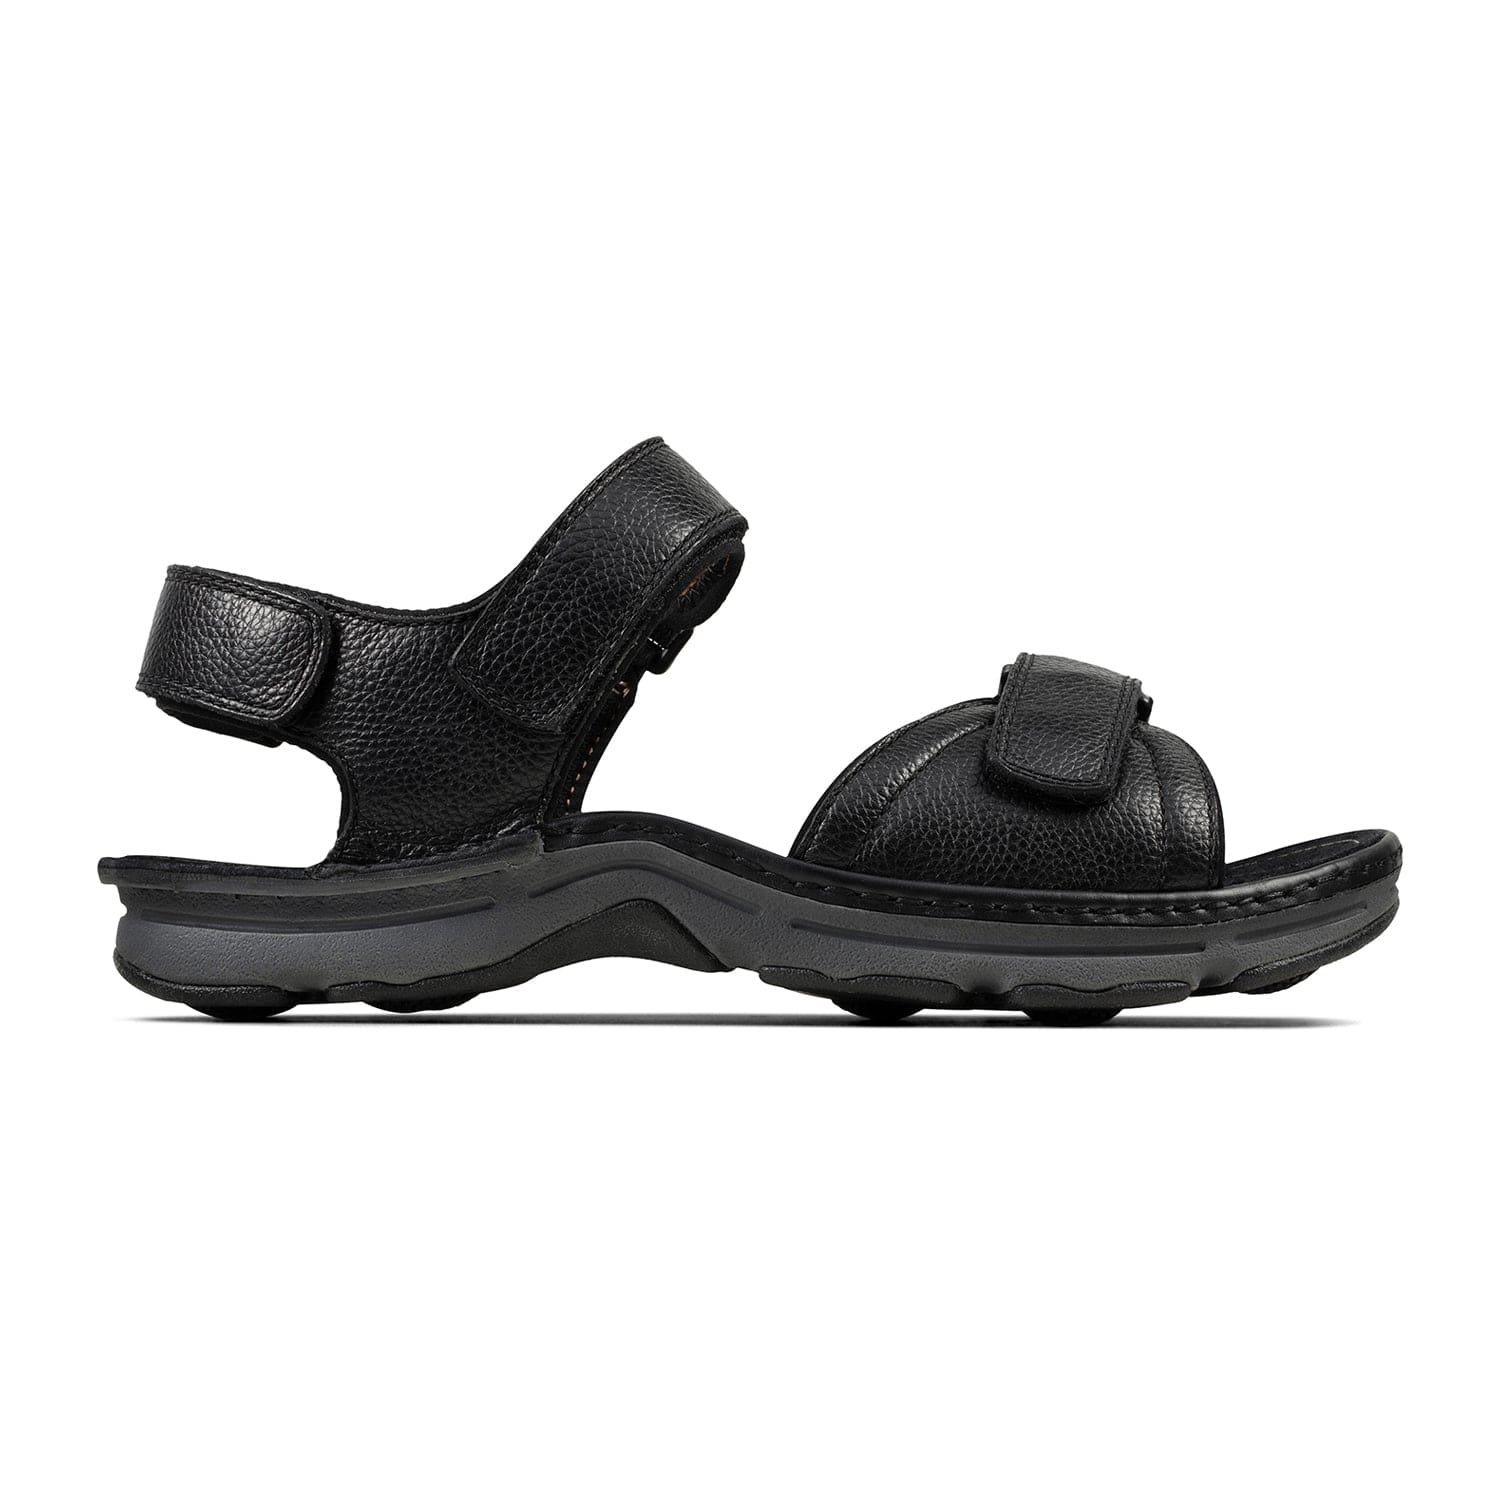 Clarks ATL Part       Sandals - Black - 261519967 - G Width (Standard Fit)